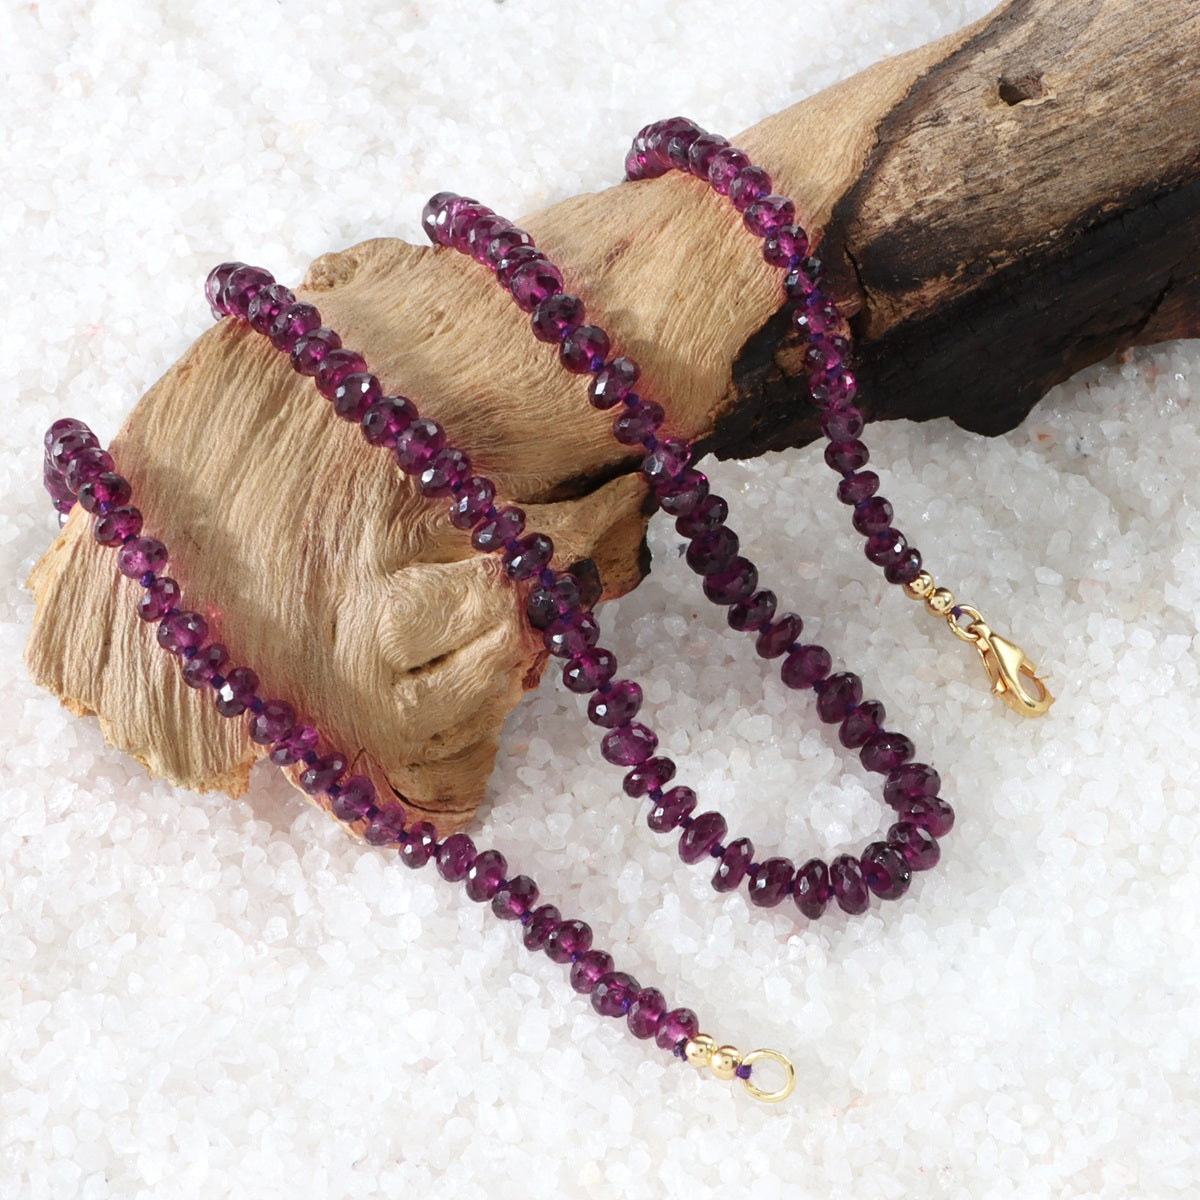 uxurious Purple Garnet Gemstone Necklace for elegant occasions